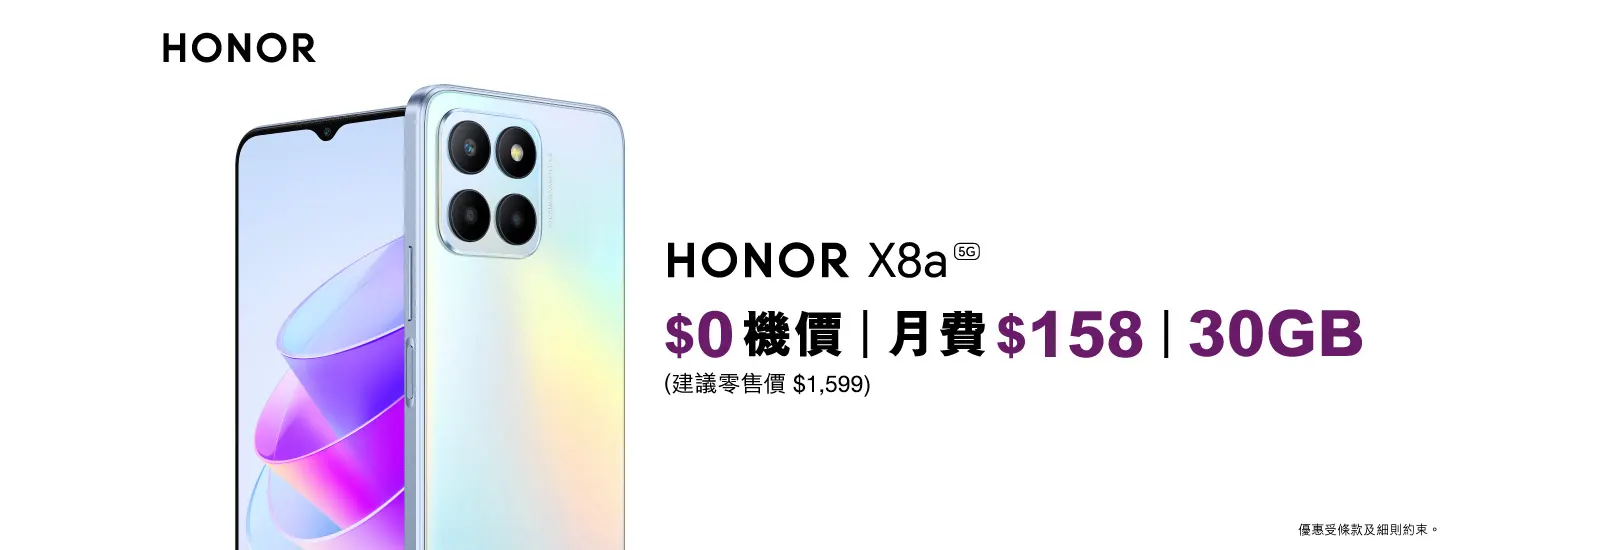 HONOR X8a 5G